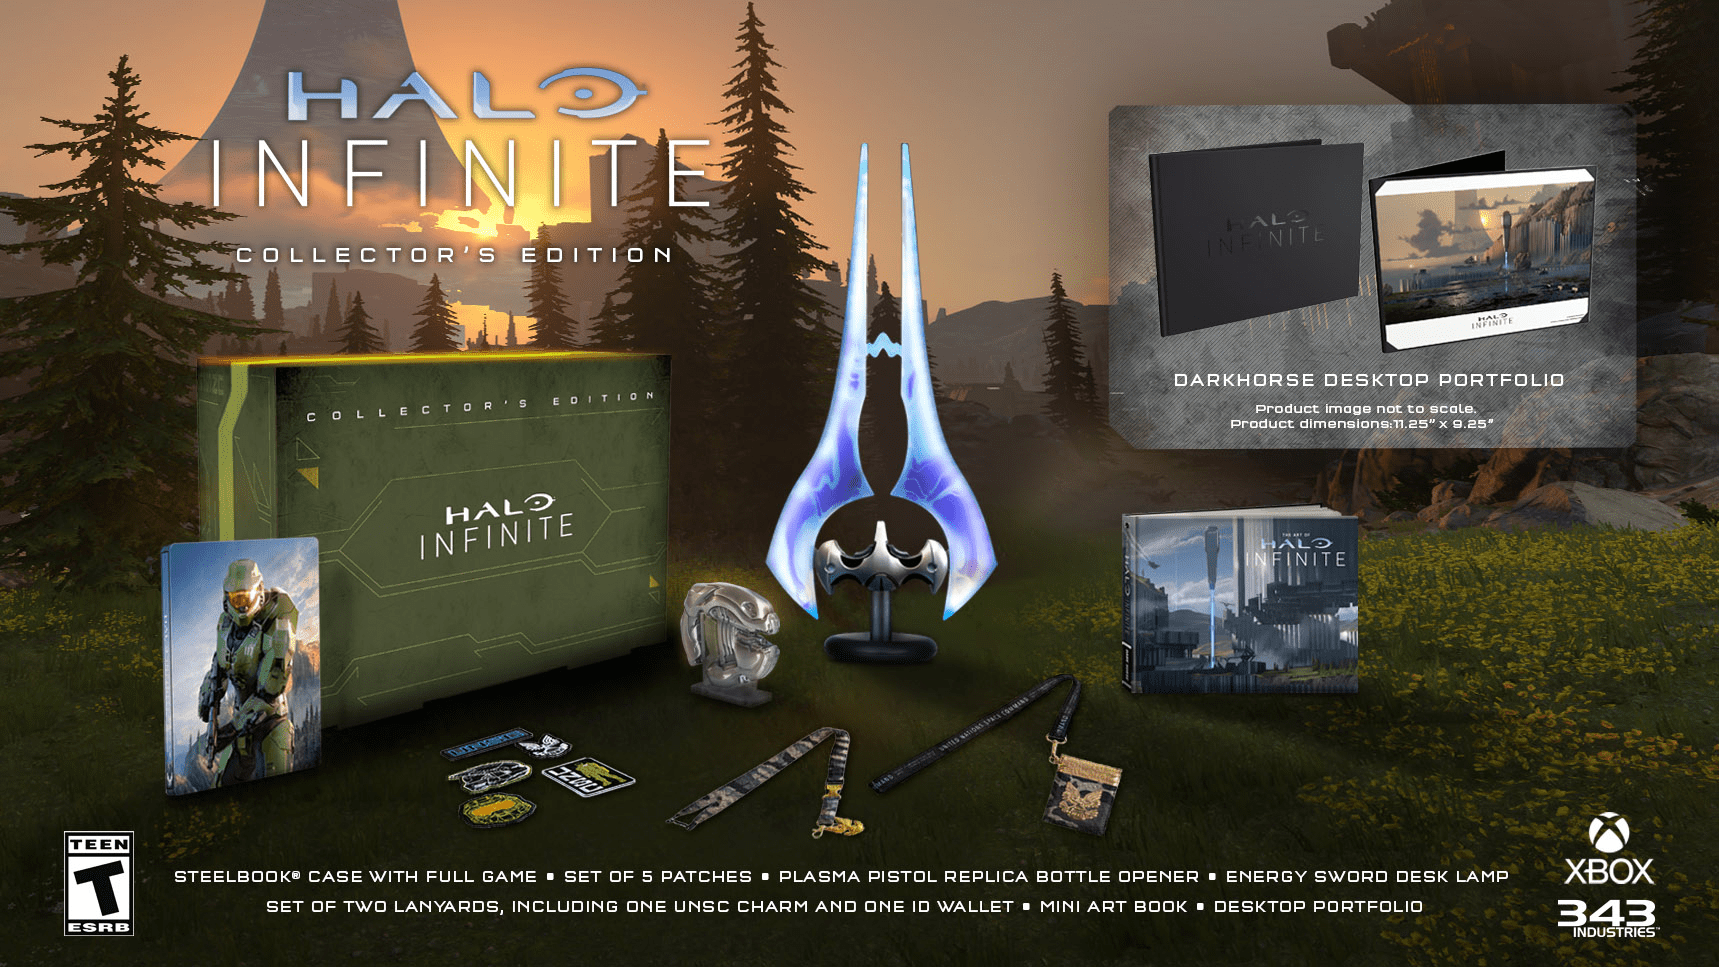 Halo Infinite Collector edition $99.99